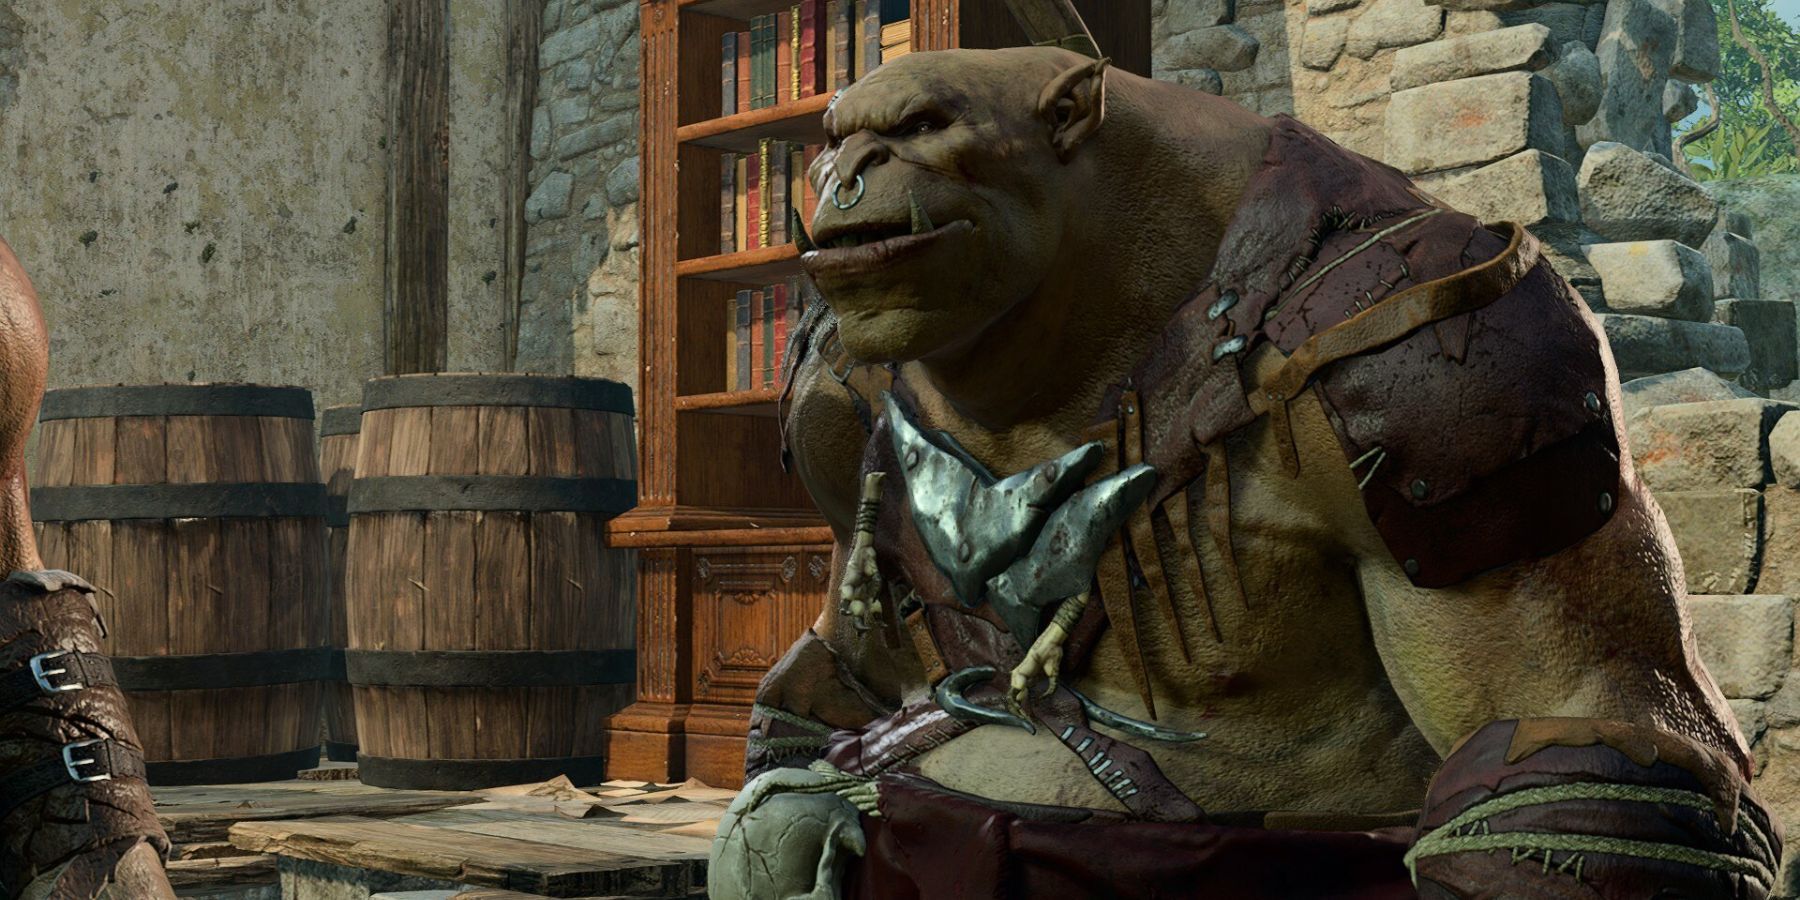 Baldur's Gate 3: Should You Kill Or Recruit The Ogres?